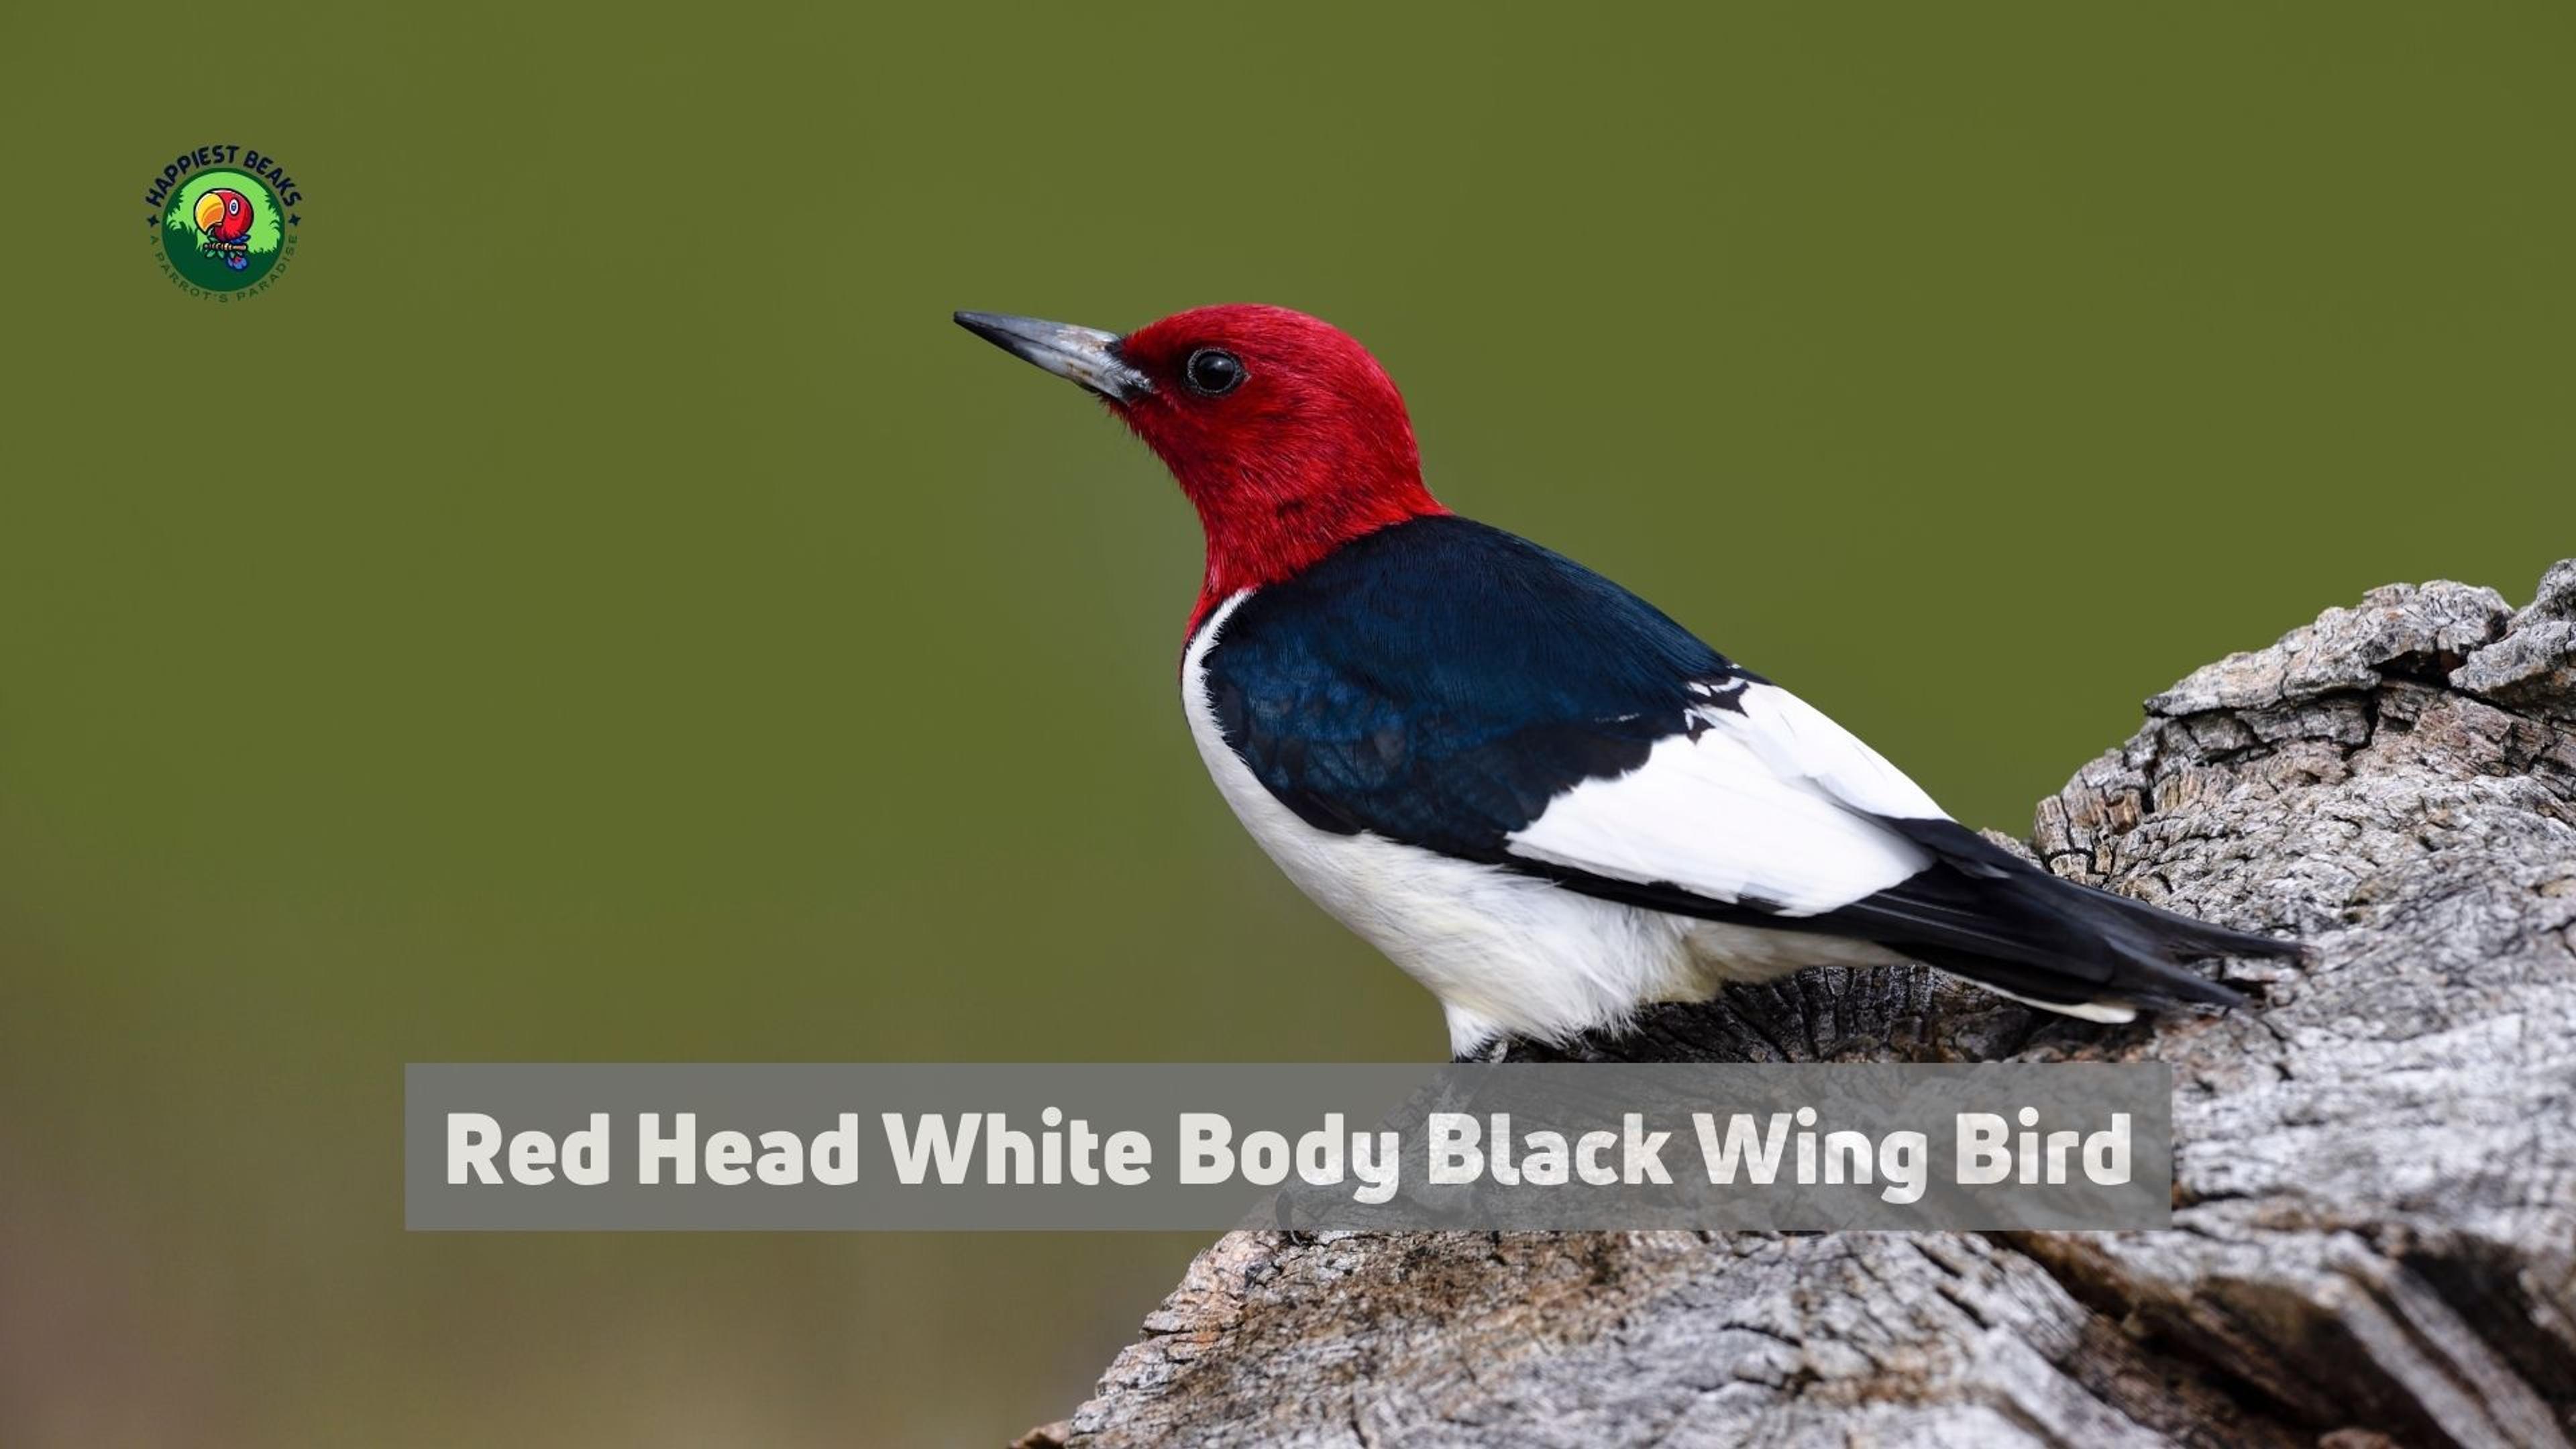 Red Head White Body Black Wing Bird